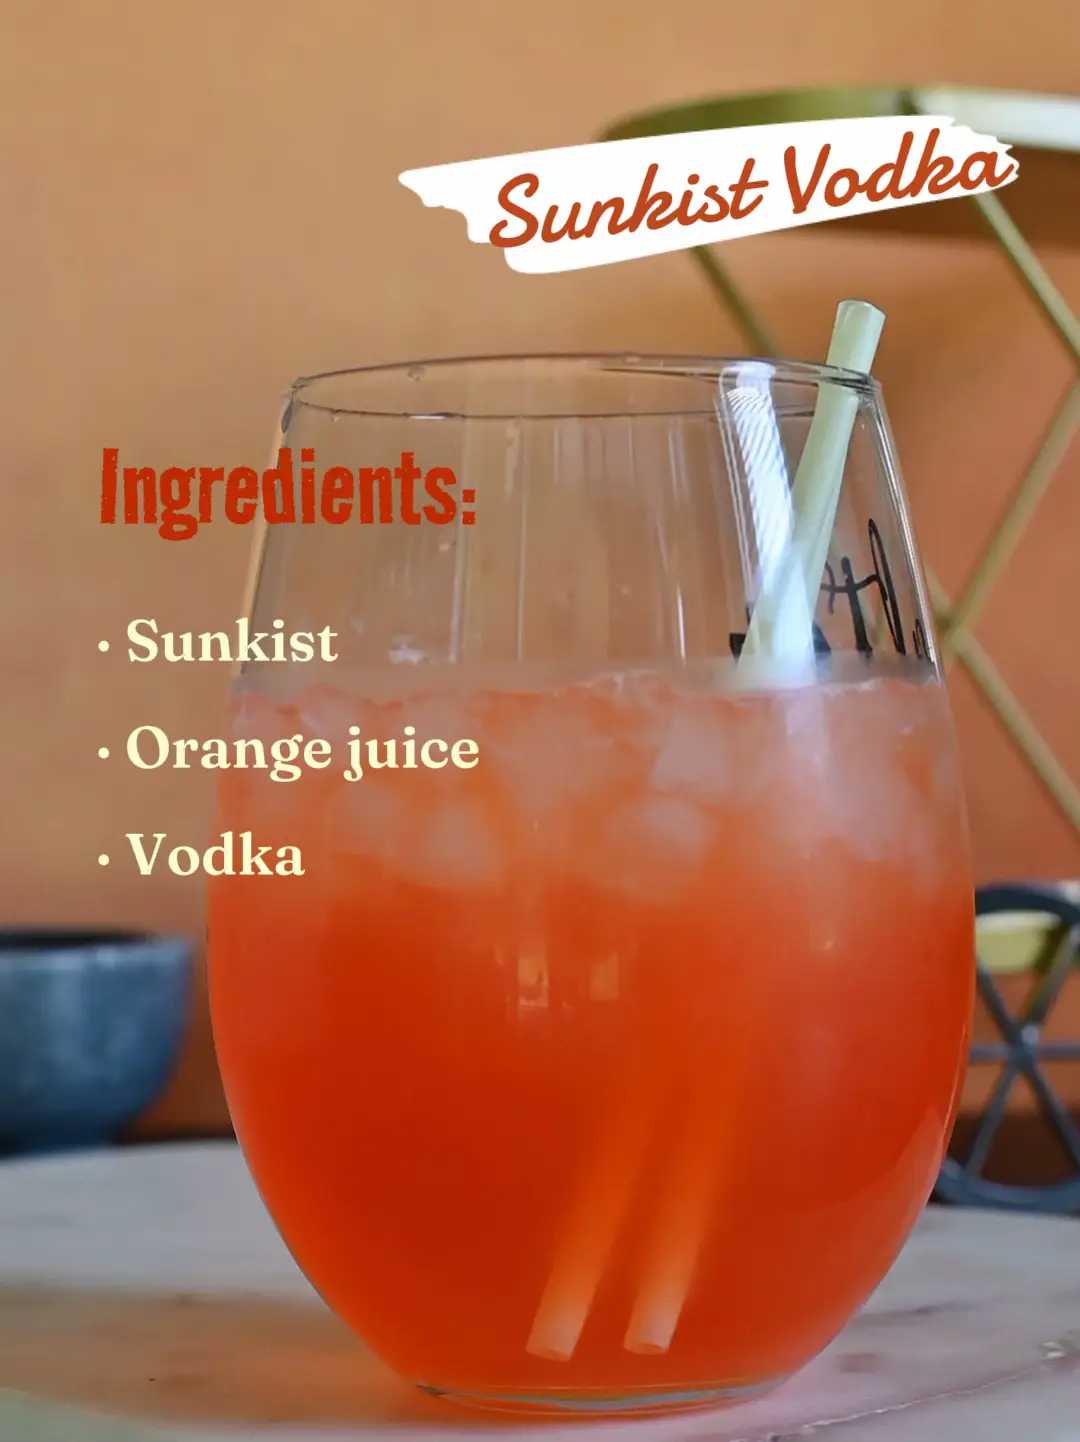  A glass of orange juice with vodka.